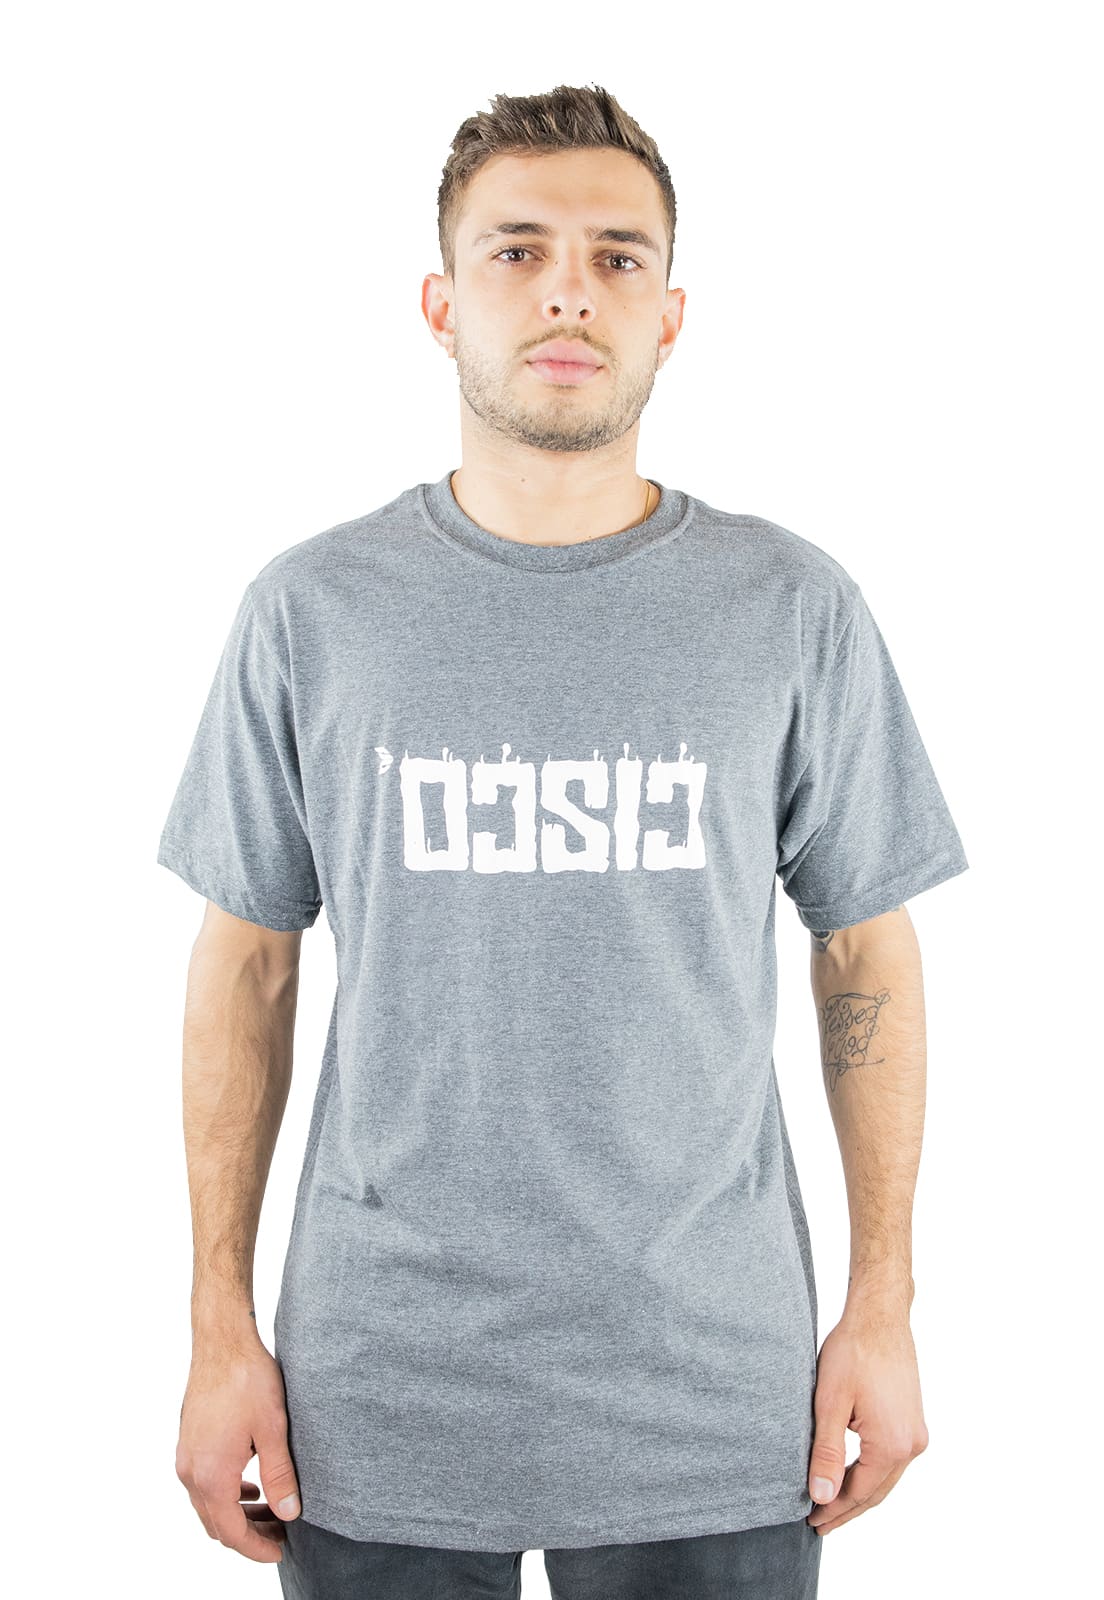 Camiseta Cisco Skate Clothing Street